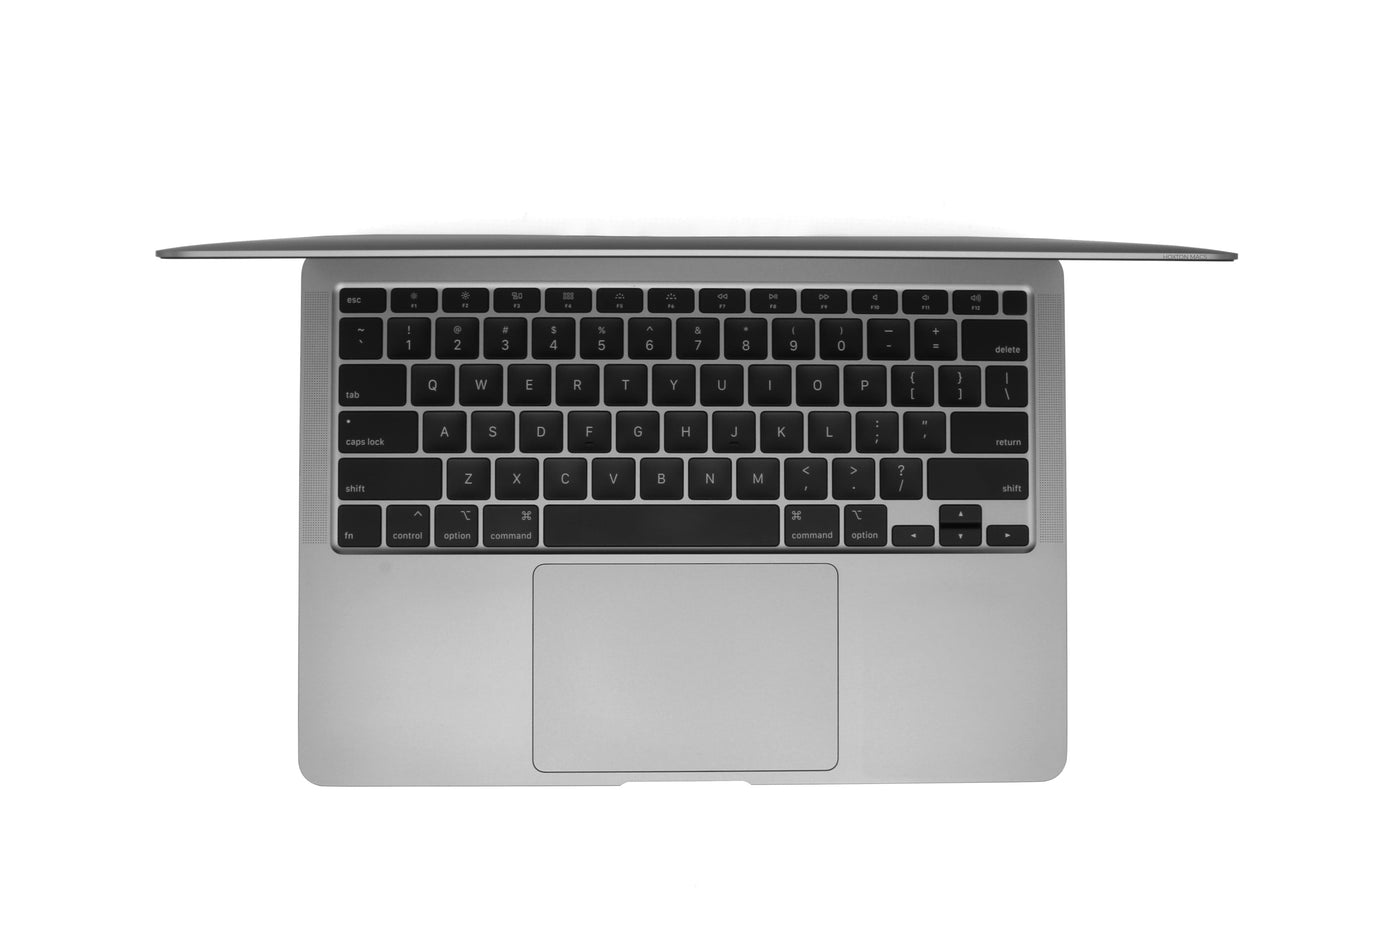 Apple MacBook Air 13-inch MacBook Air 13-inch M1 (Space Grey, 2020) - Excellent